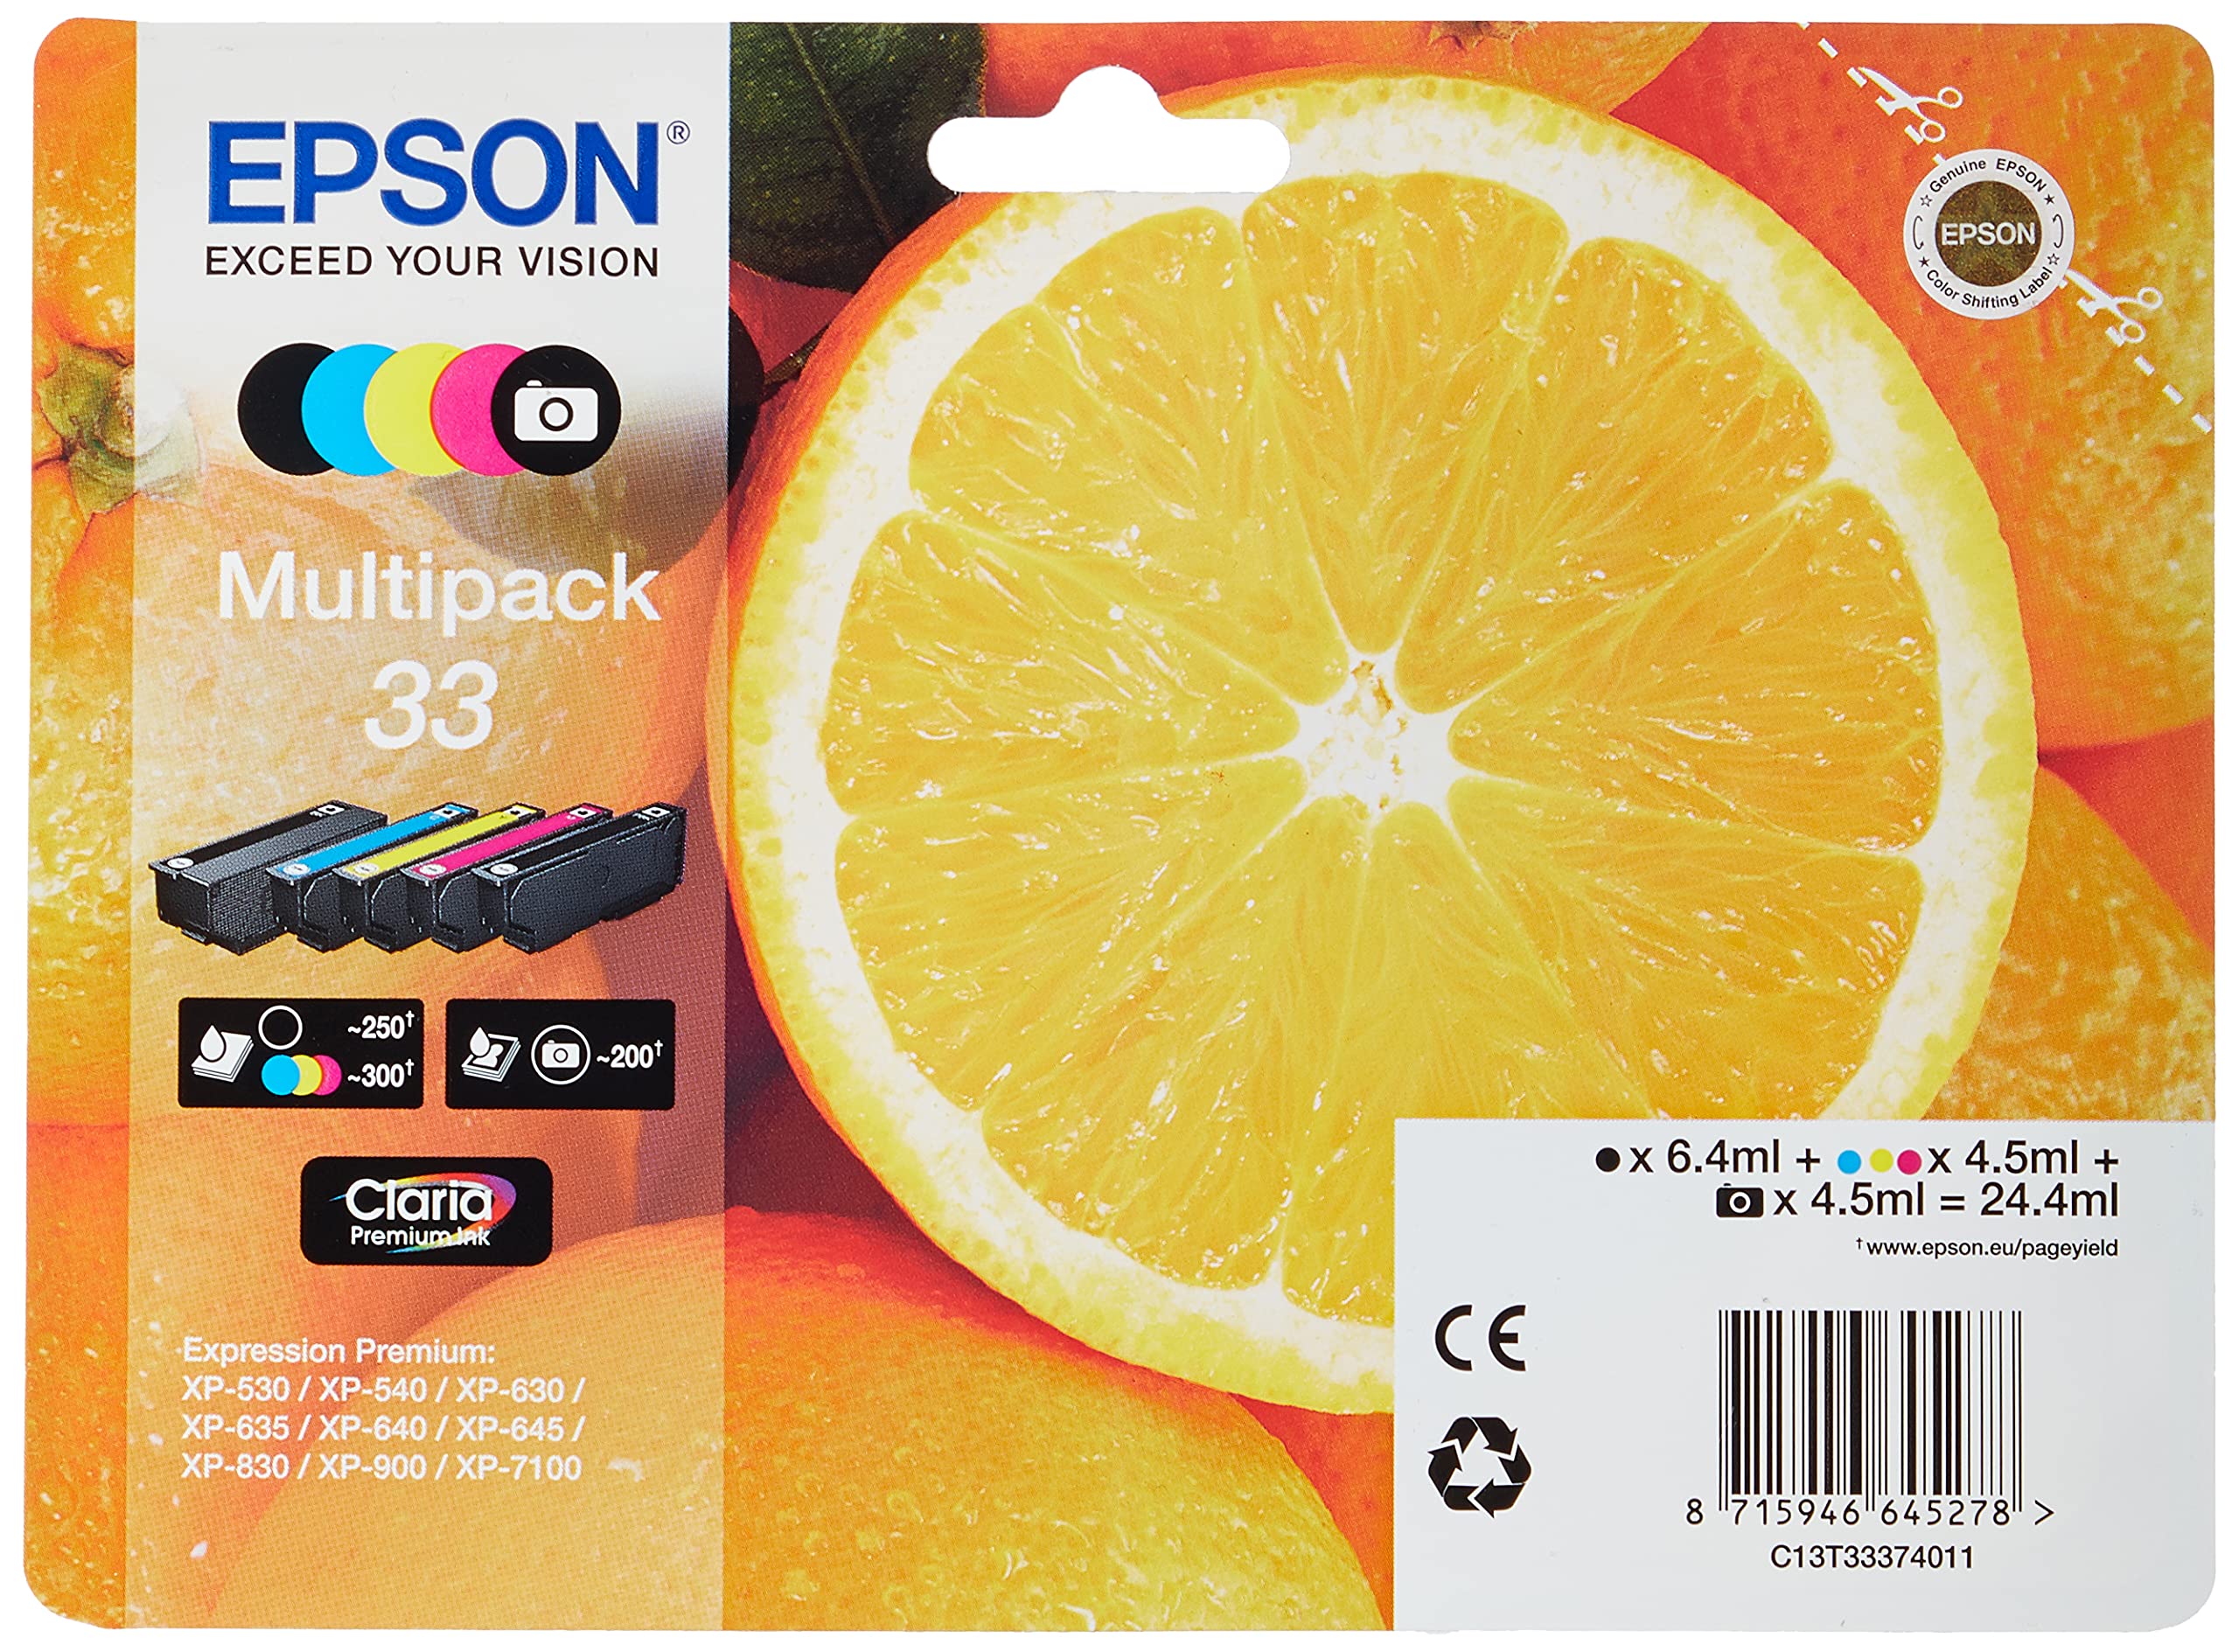 Multipack Epson t333740 5 colori n.33